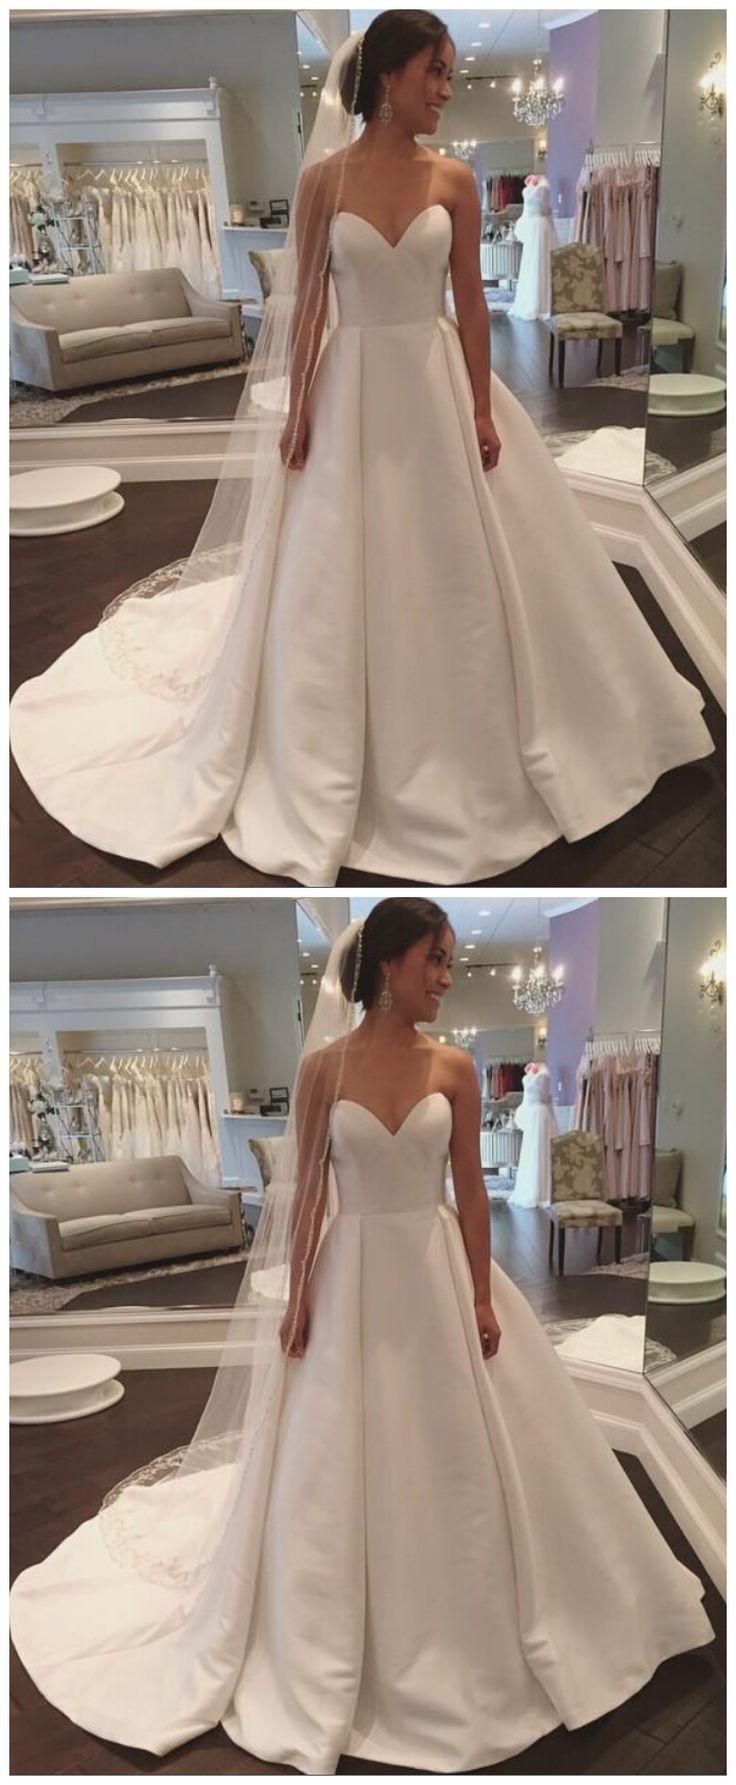 زفاف - Wedding Dresses, Wedding Gown,White Sweetheart Satin Wedding Dress Simple And Claasic Formal Gowns Women Party Dresses From Mfprom